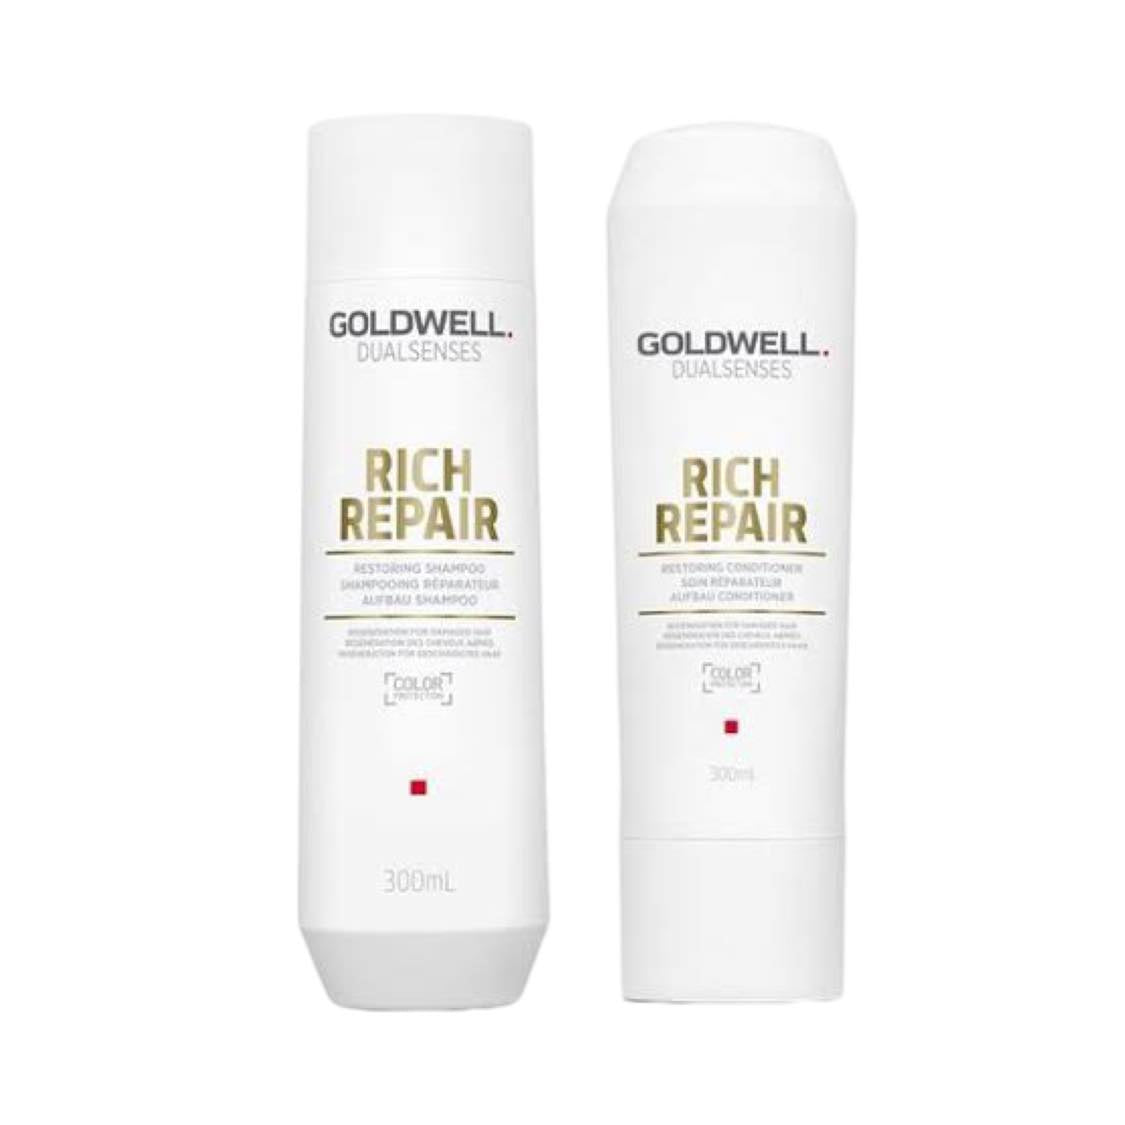 Dual Senses Duo Pack - Rich Repair Shampoo & Conditioner